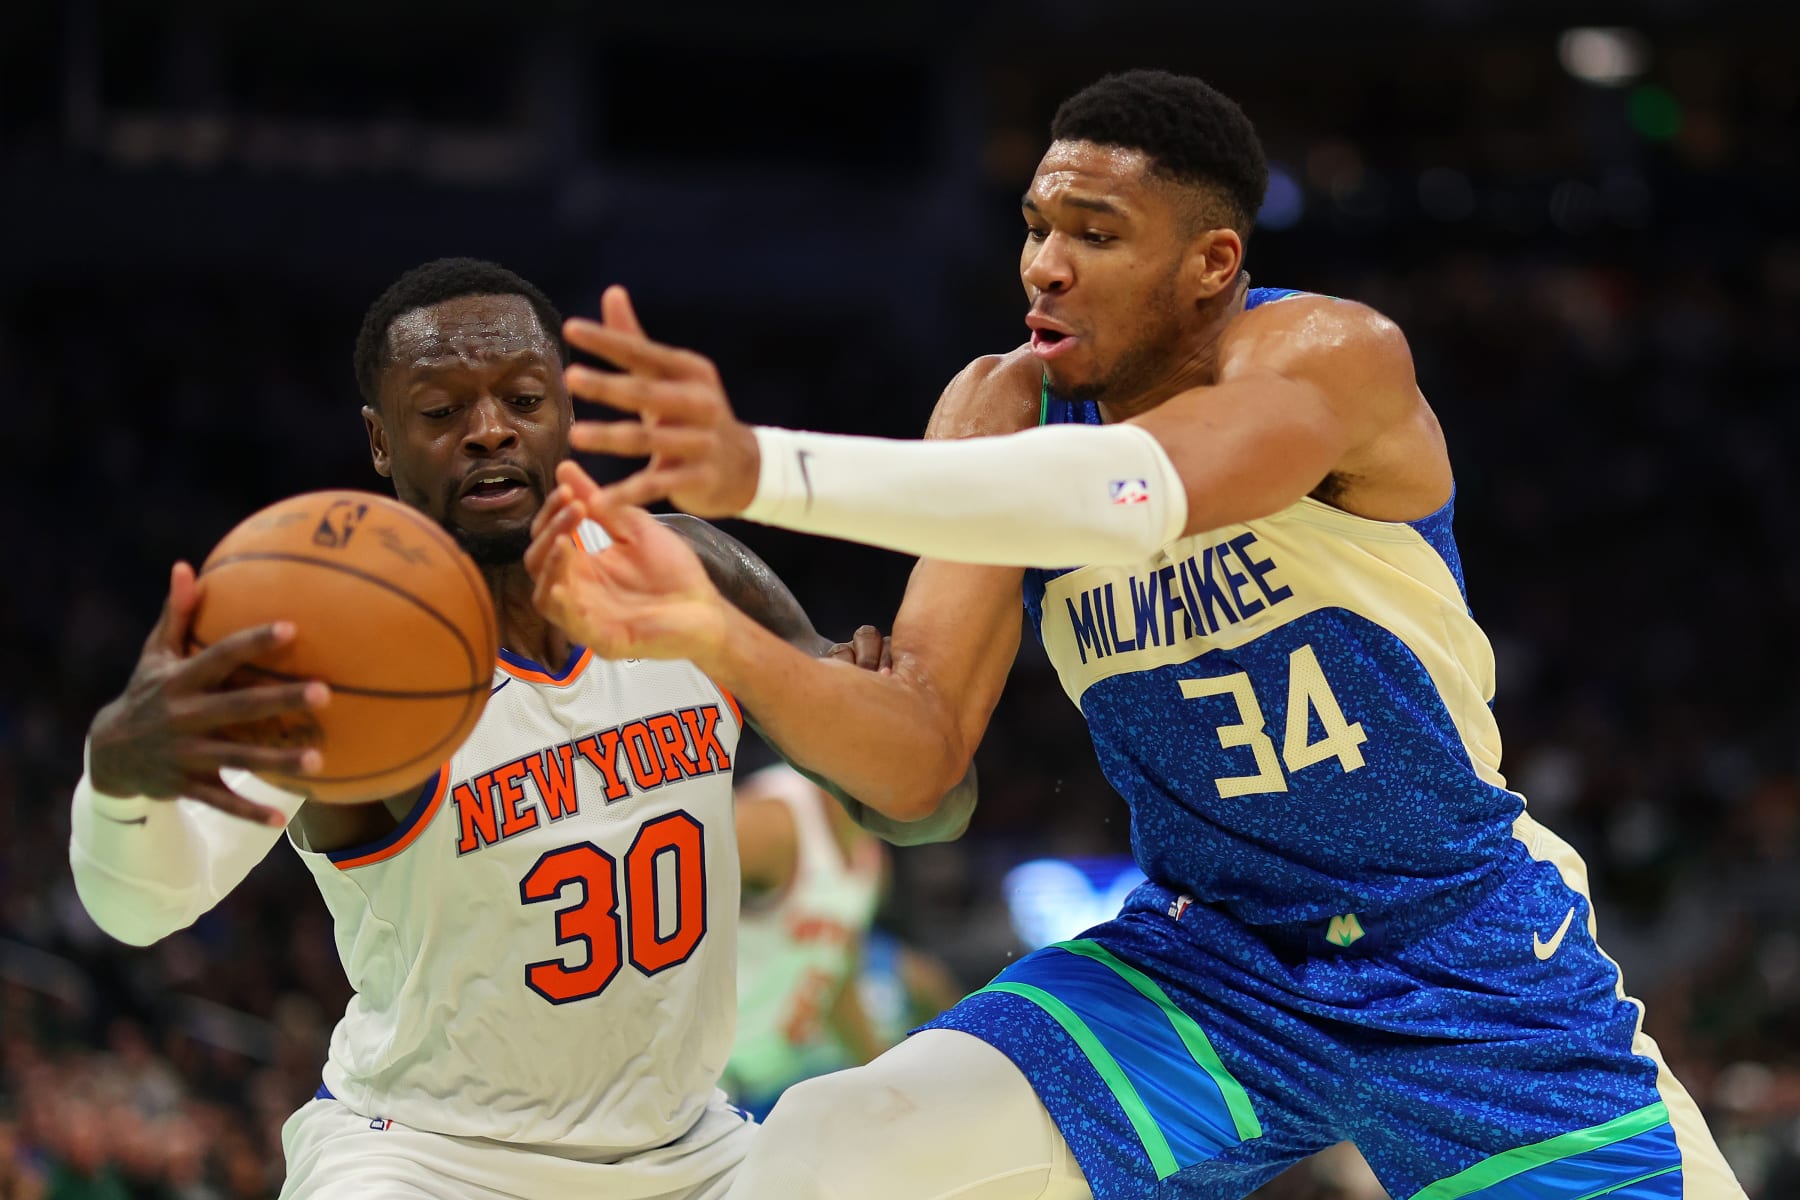 How to watch New York Knicks vs Milwaukee Bucks NBA game: Live